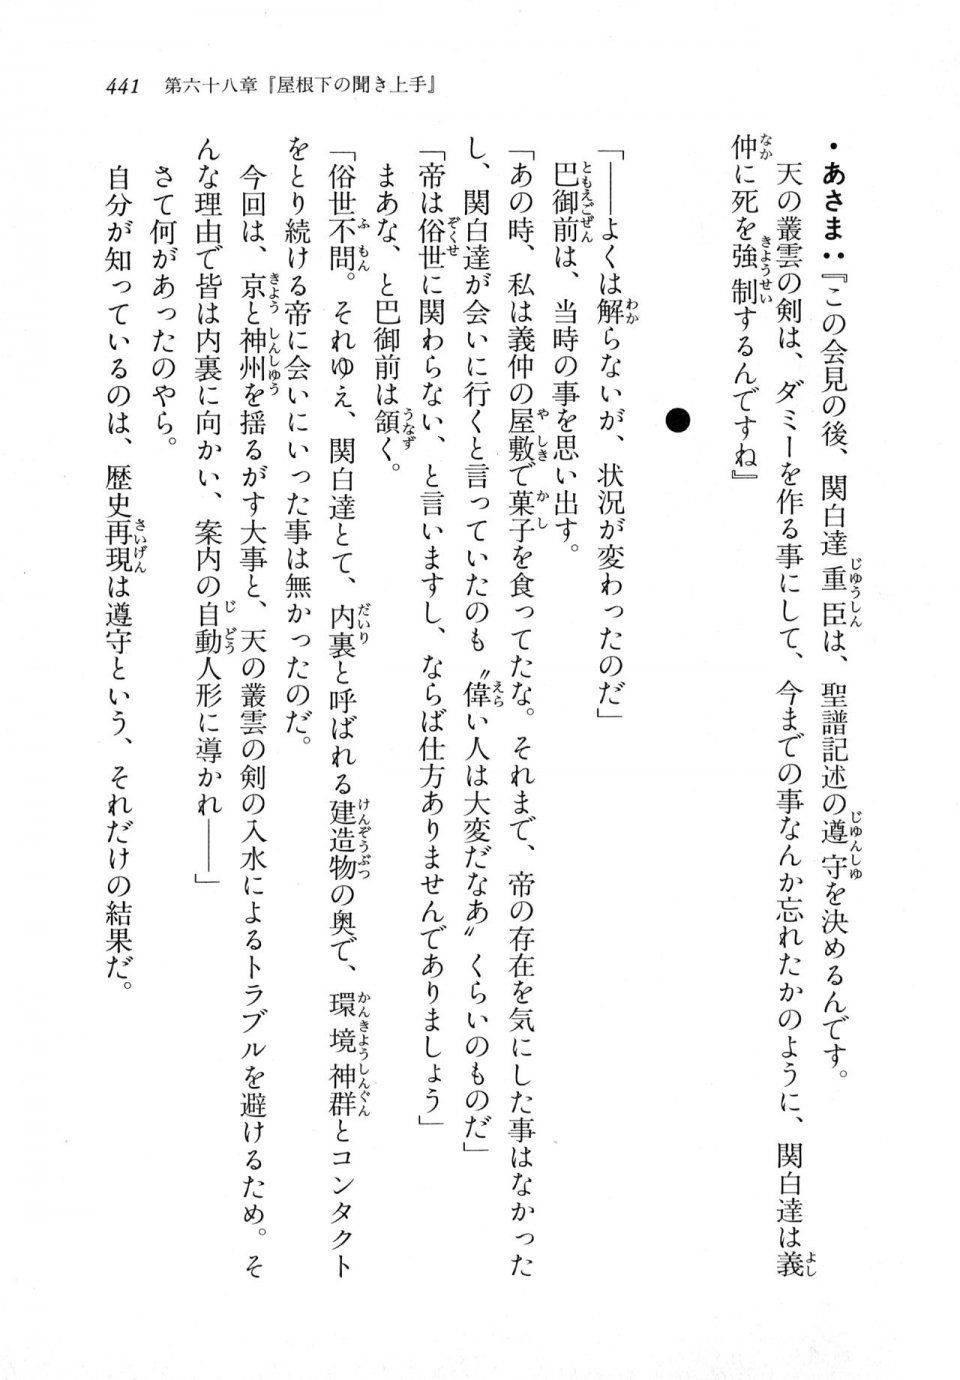 Kyoukai Senjou no Horizon LN Vol 18(7C) Part 1 - Photo #441